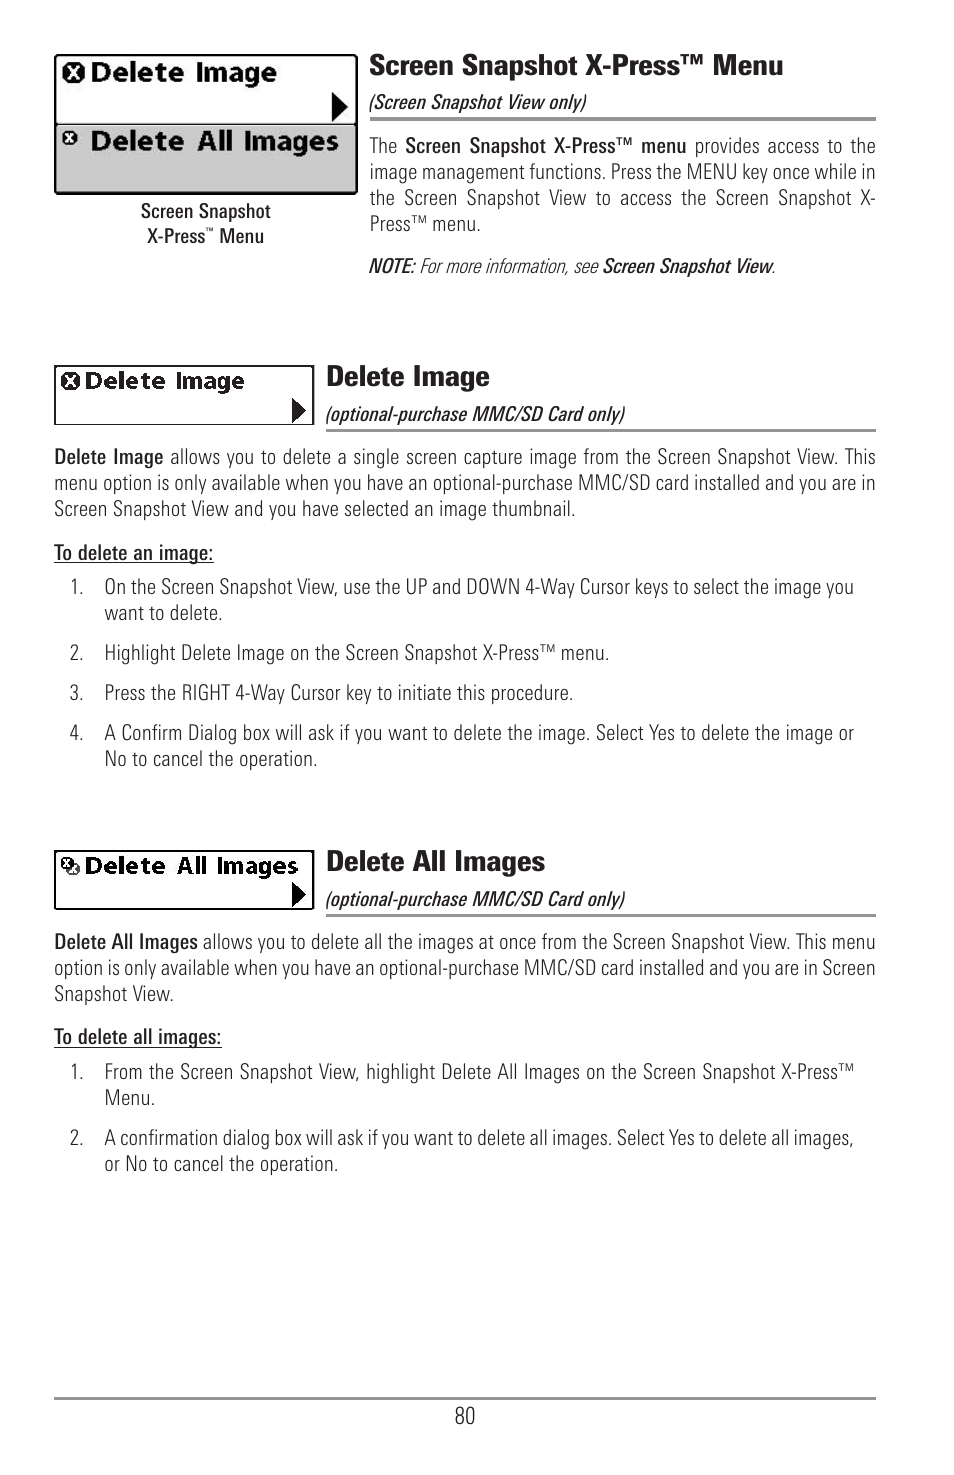 Screen snapshot x-press menu, Screen snapshot x-press™ menu, Delete image | Delete all images | Humminbird 1155C User Manual | Page 88 / 129